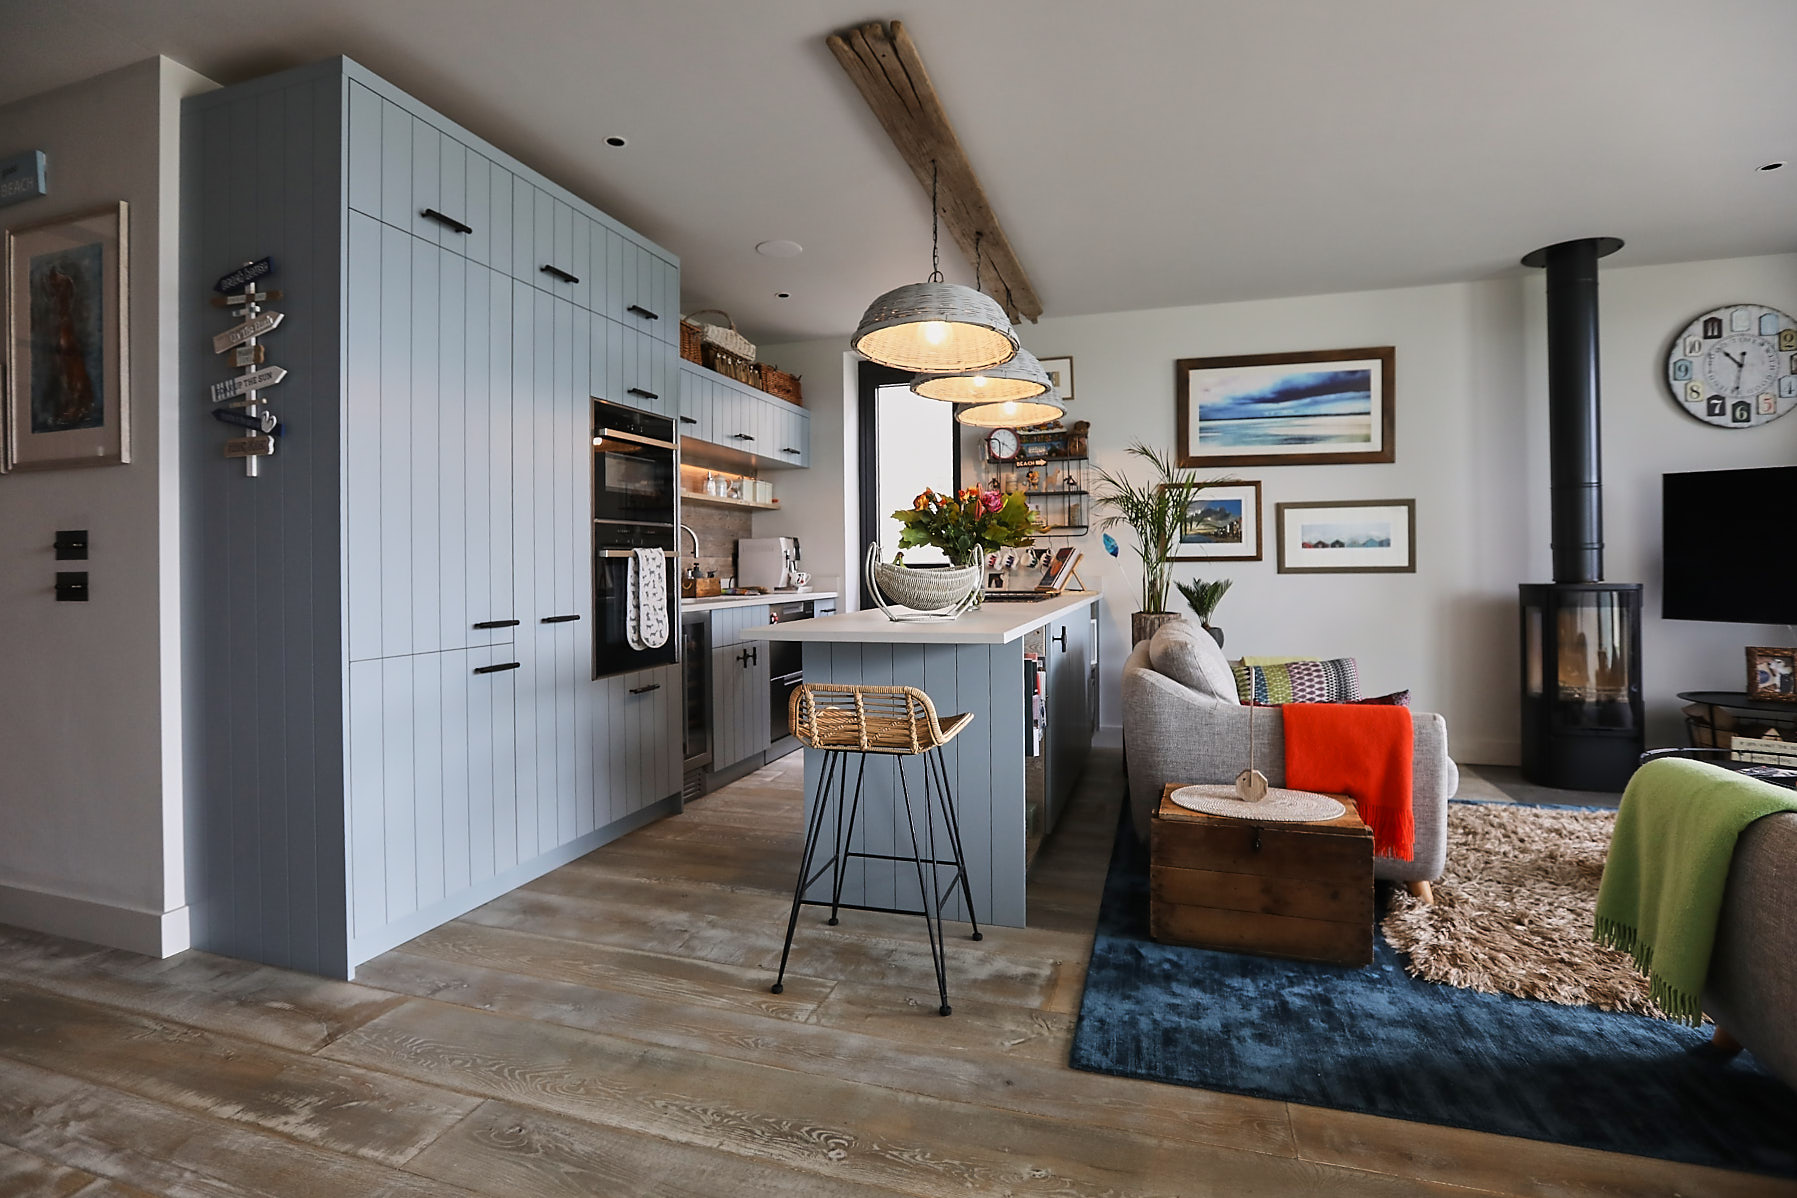 Bespoke blue kitchen island with reclaimed wood floor